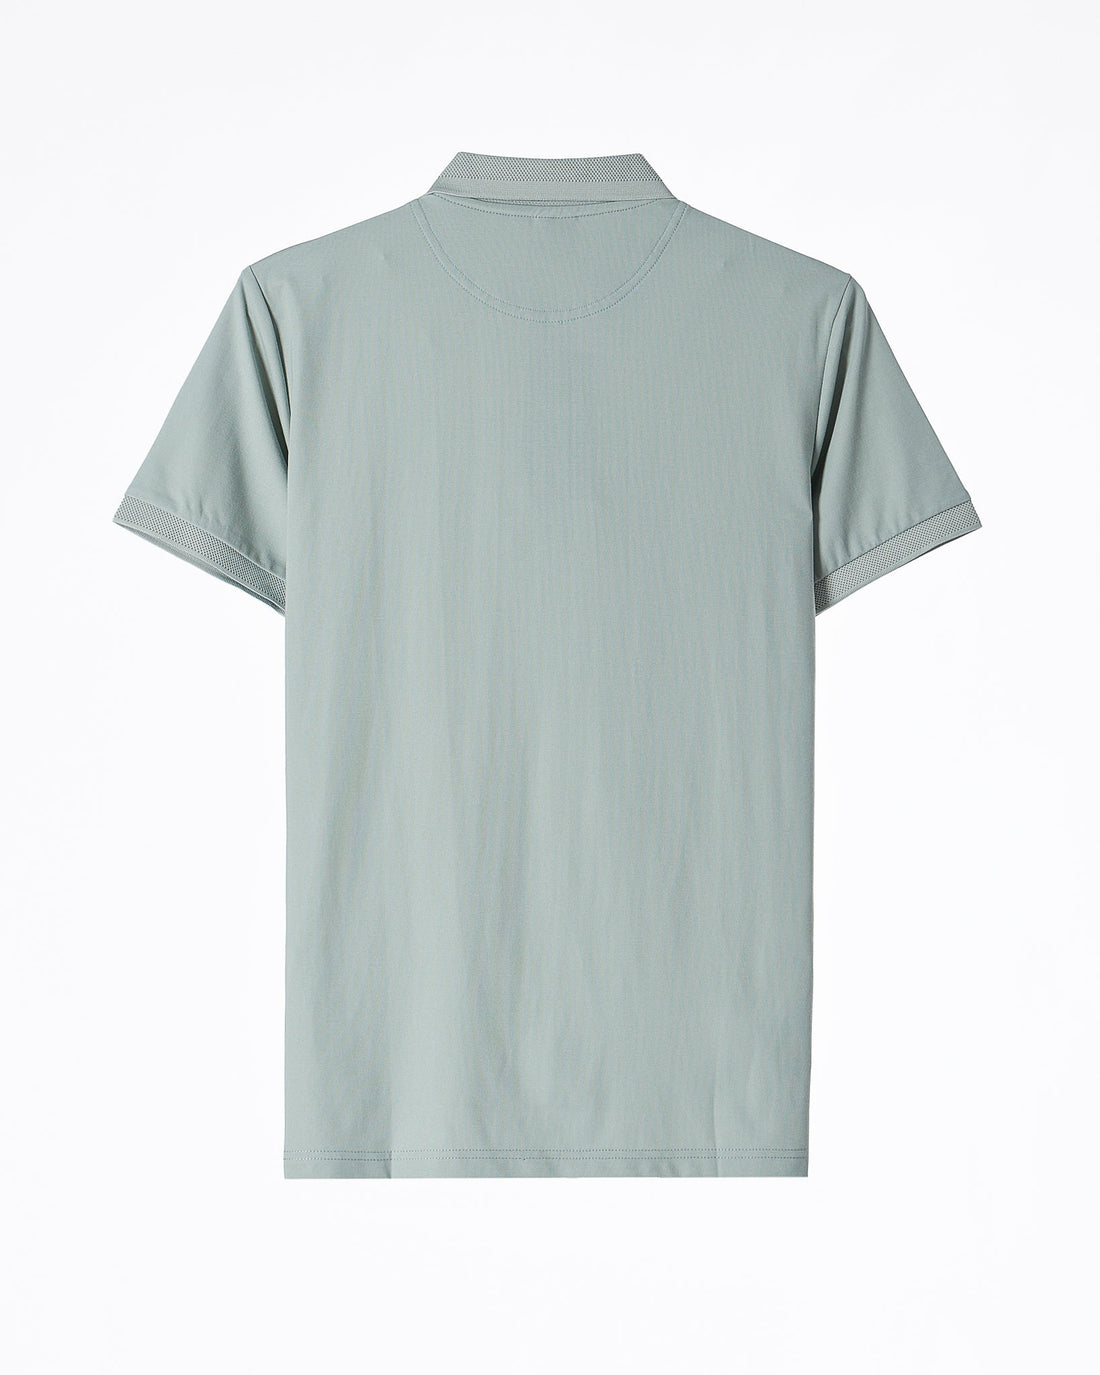 MOI OUTFIT-Boss Men Green Polo Shirt 22.90